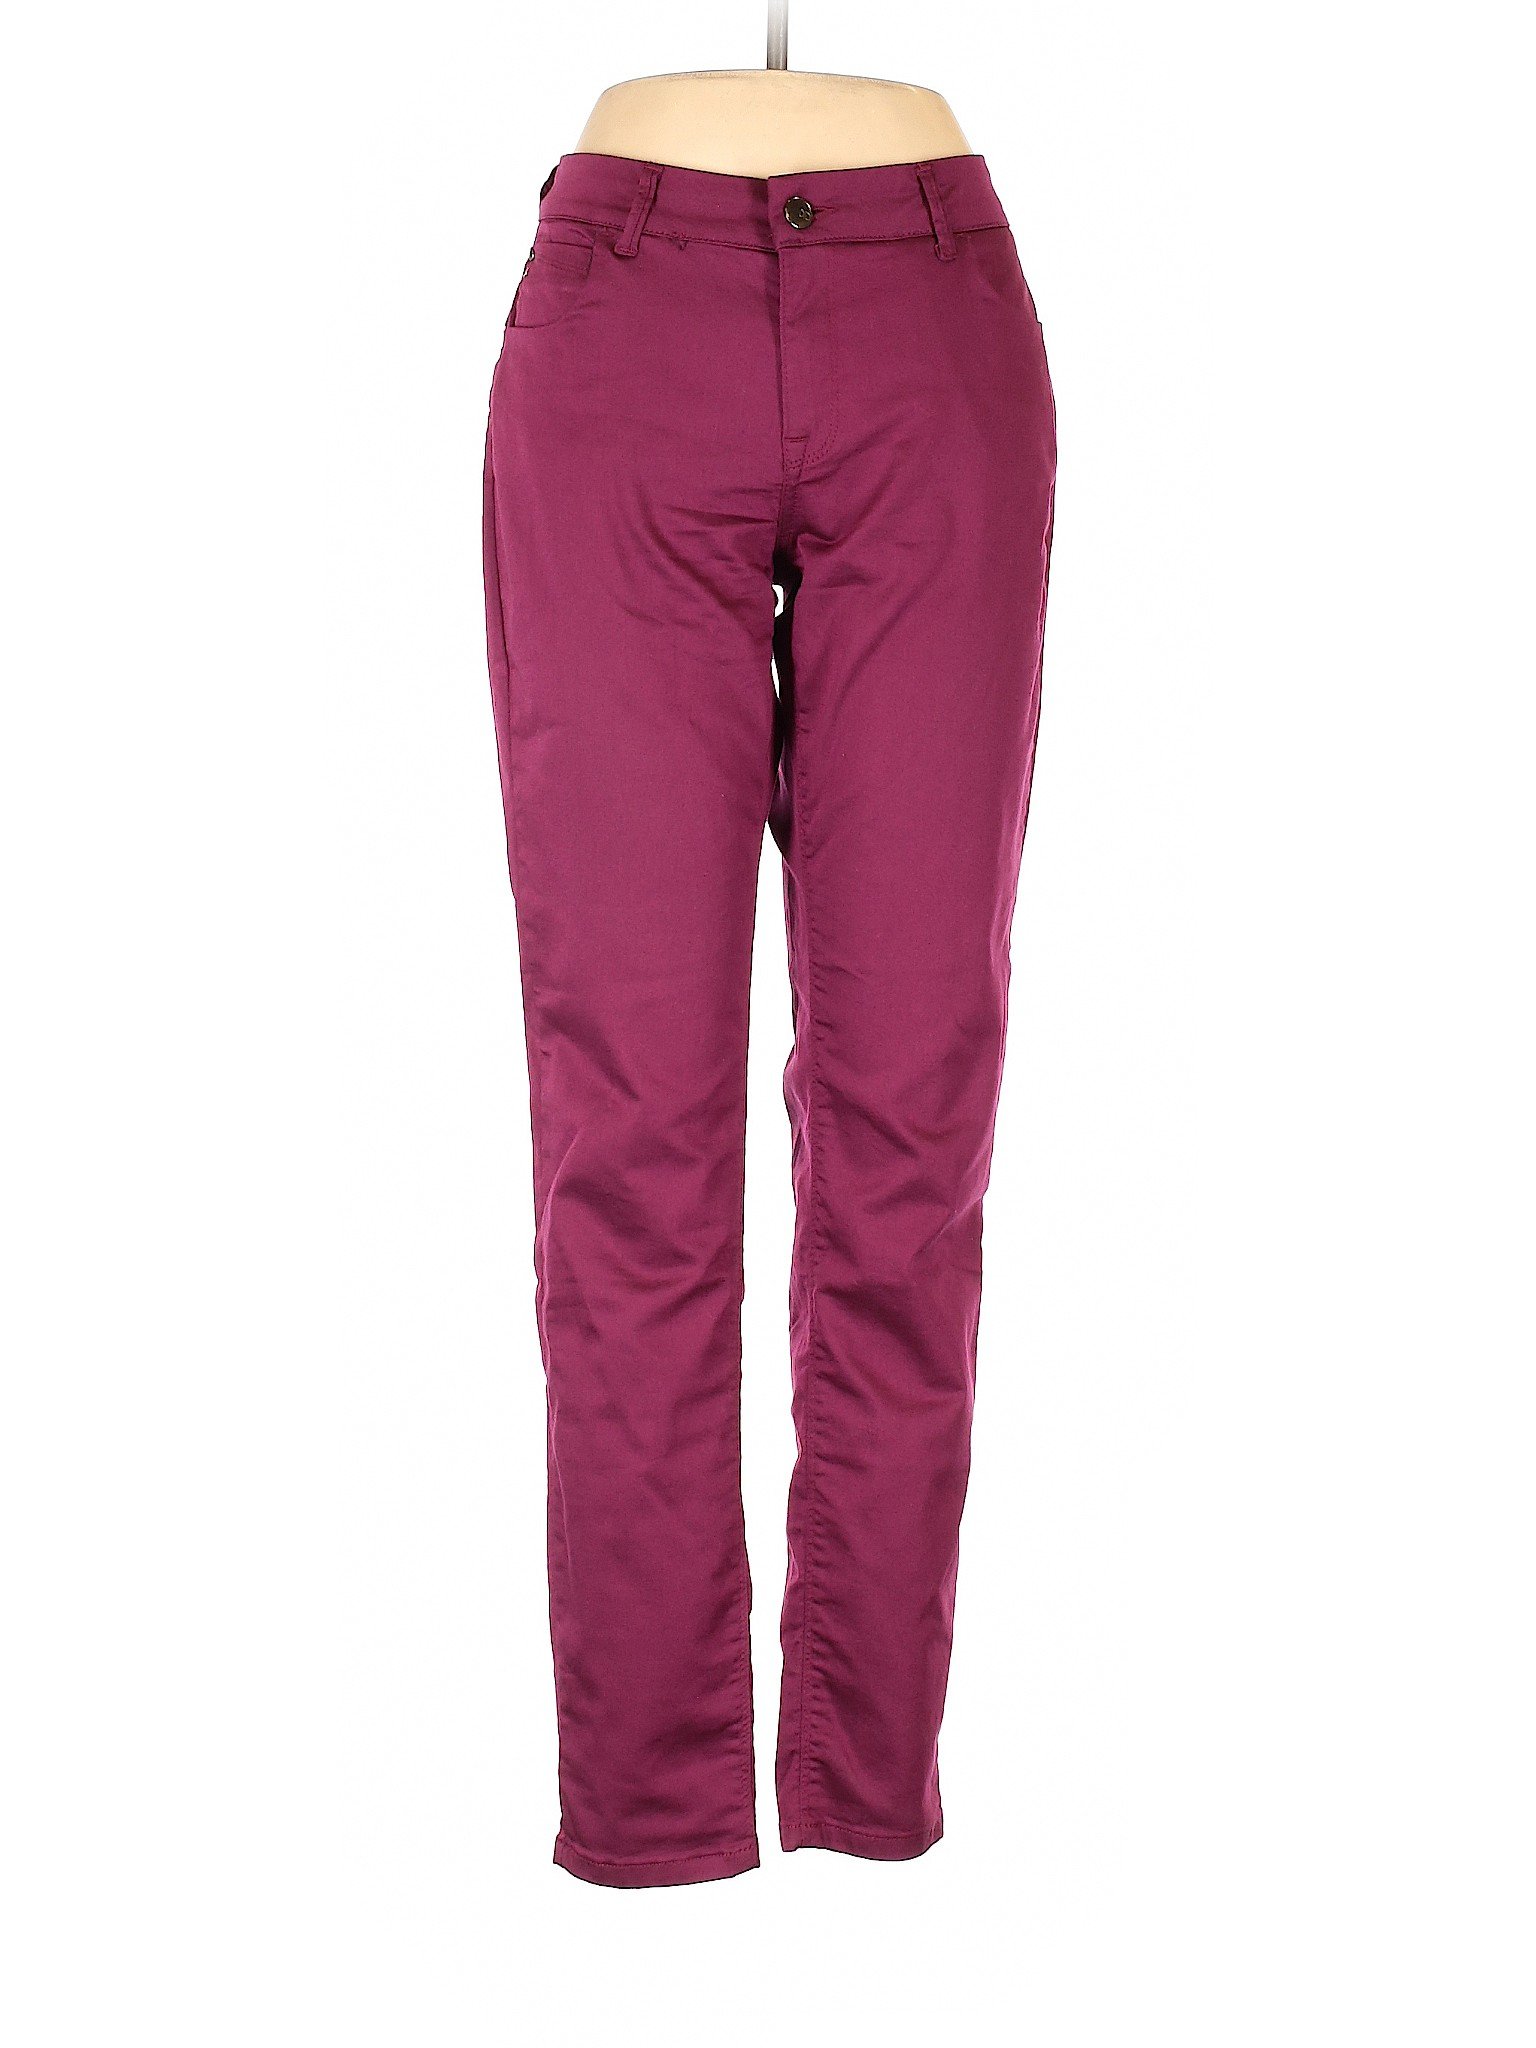 Assorted Brands Women Purple Casual Pants 40 eur | eBay